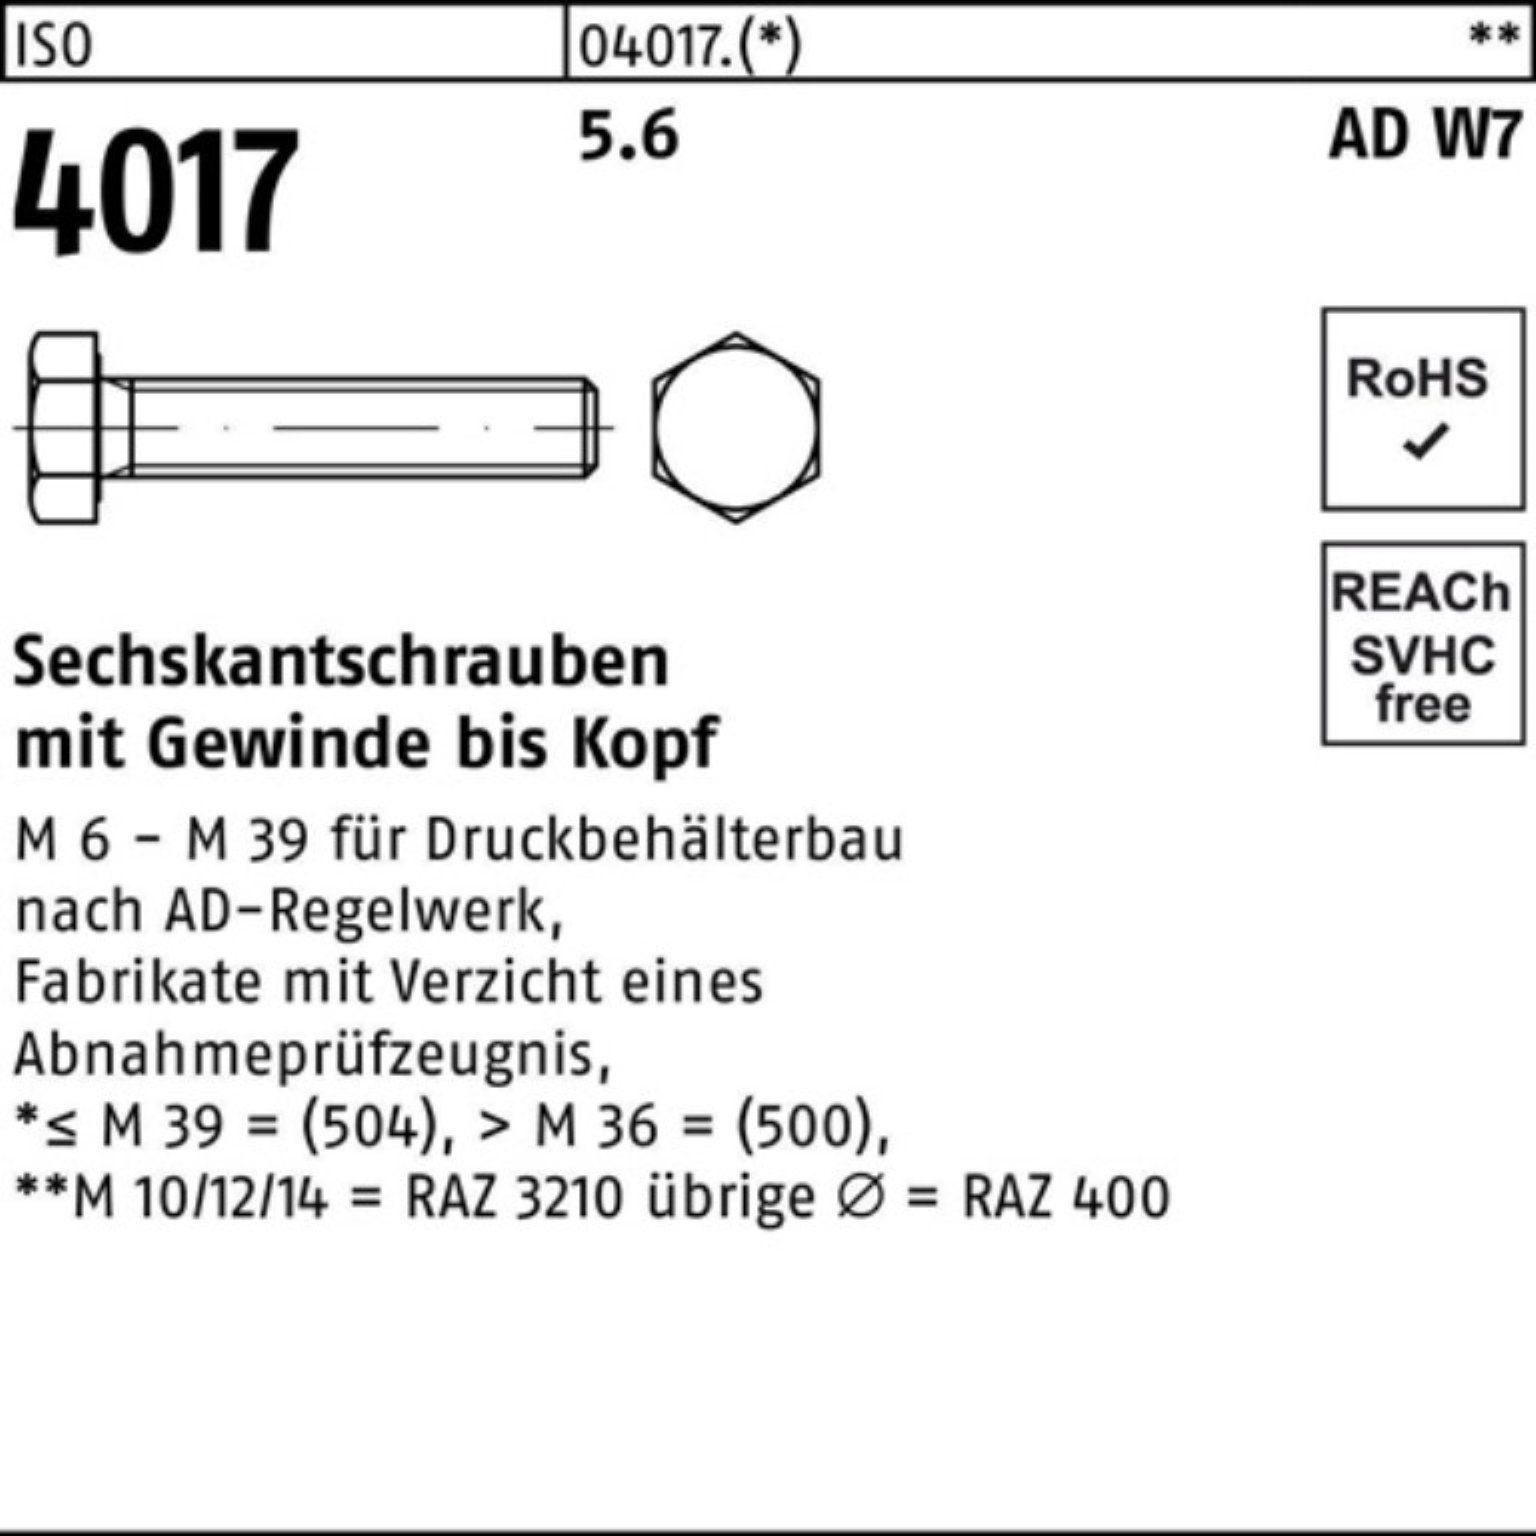 Bufab Sechskantschraube 100er Pack Sechskantschraube ISO 4017 VG M16x 40 5.6 AD W7 50 Stück I